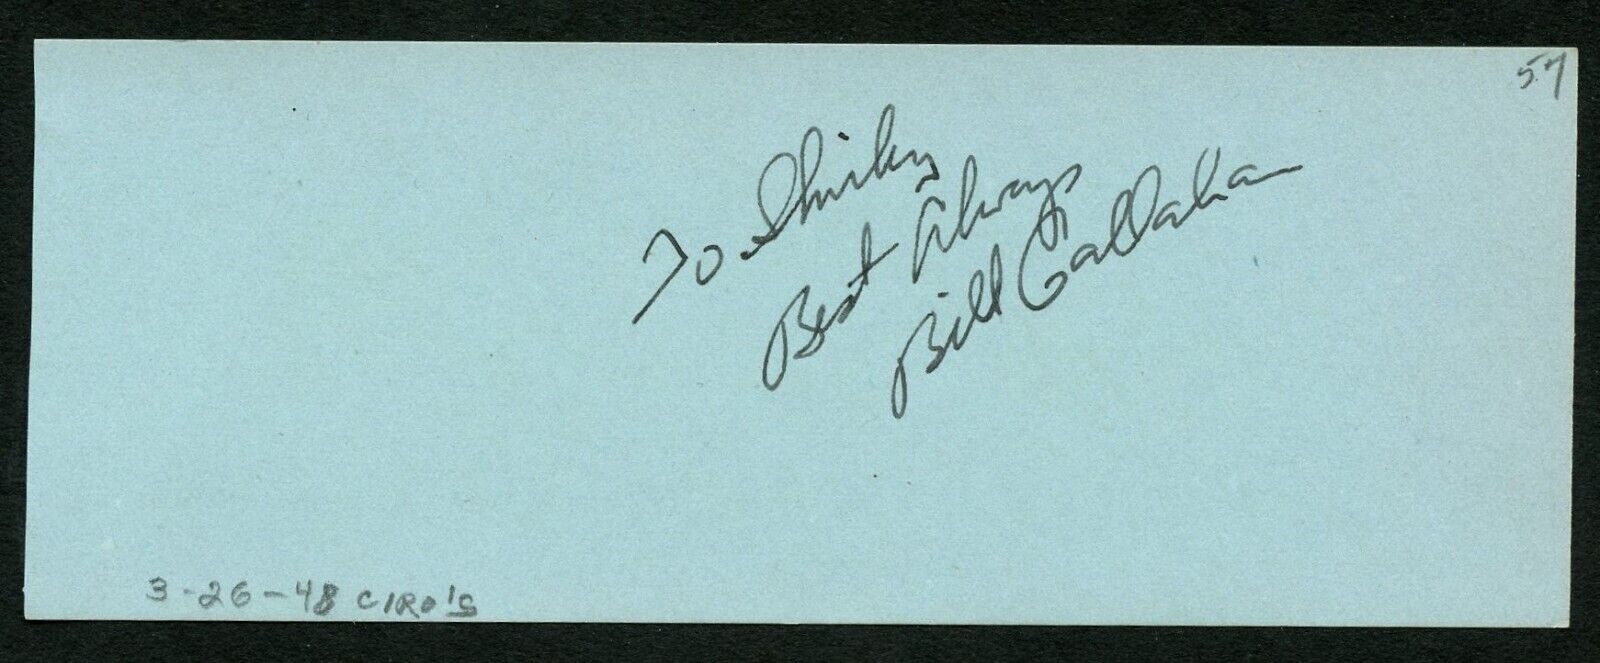 Bill Callahan d1981 signed 2x5 cut autograph on 3-26-48 at Ciro\'s Night Club